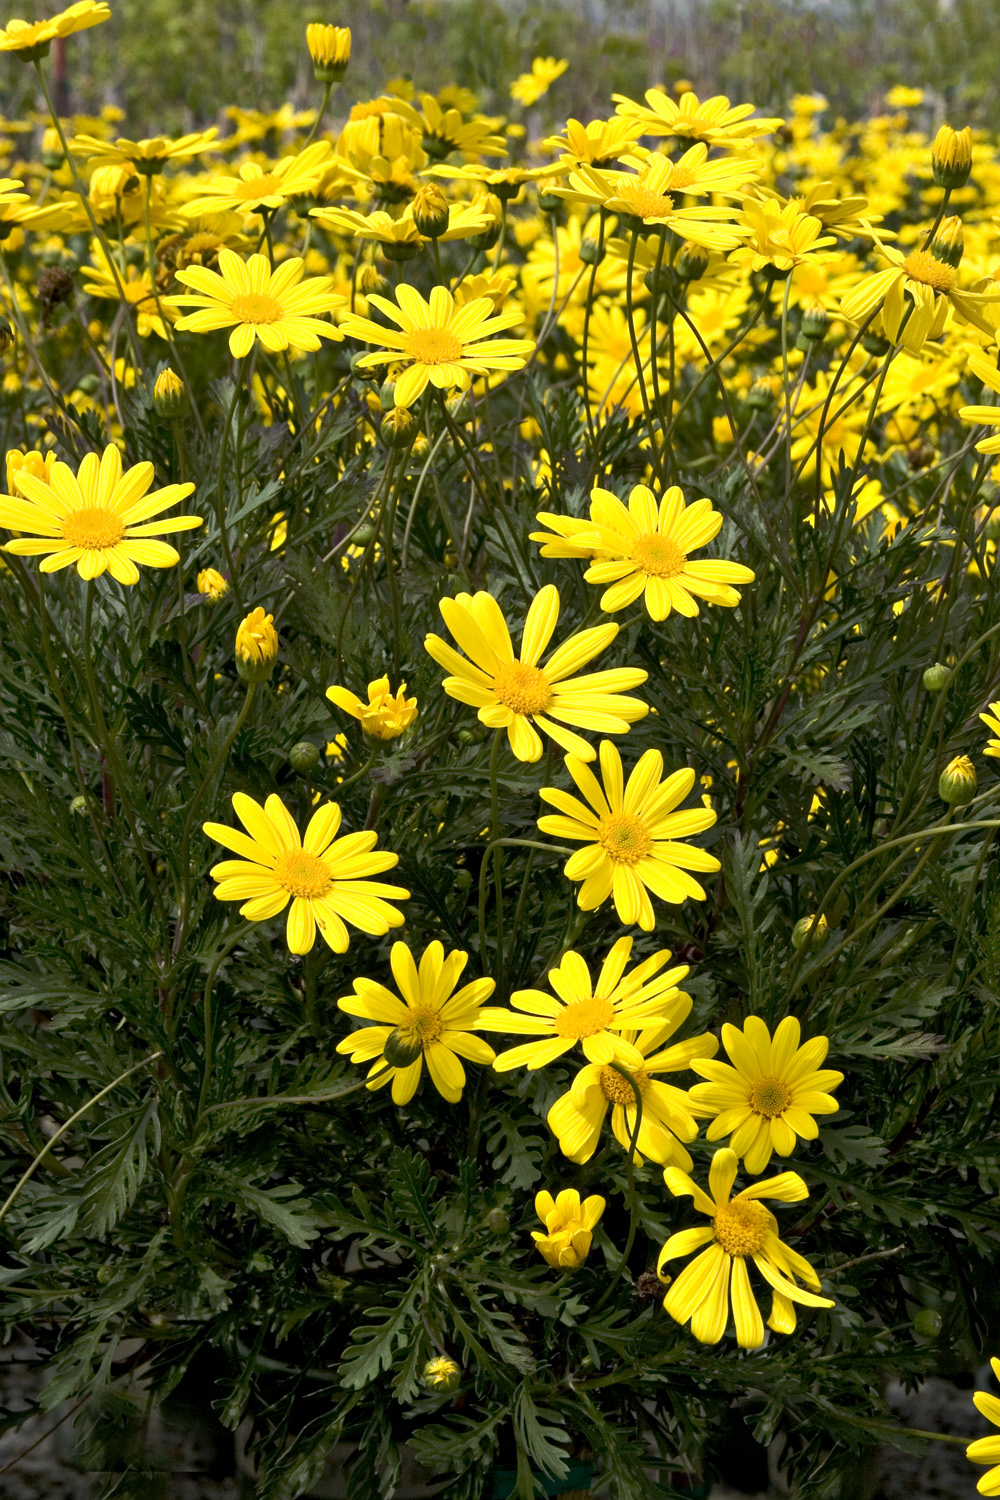 daisy yellow bush euryops plants shrubs shrub sonnenschein flowering flowers evergreen daisies pectinatus green sun athena plant monrovia growers premier